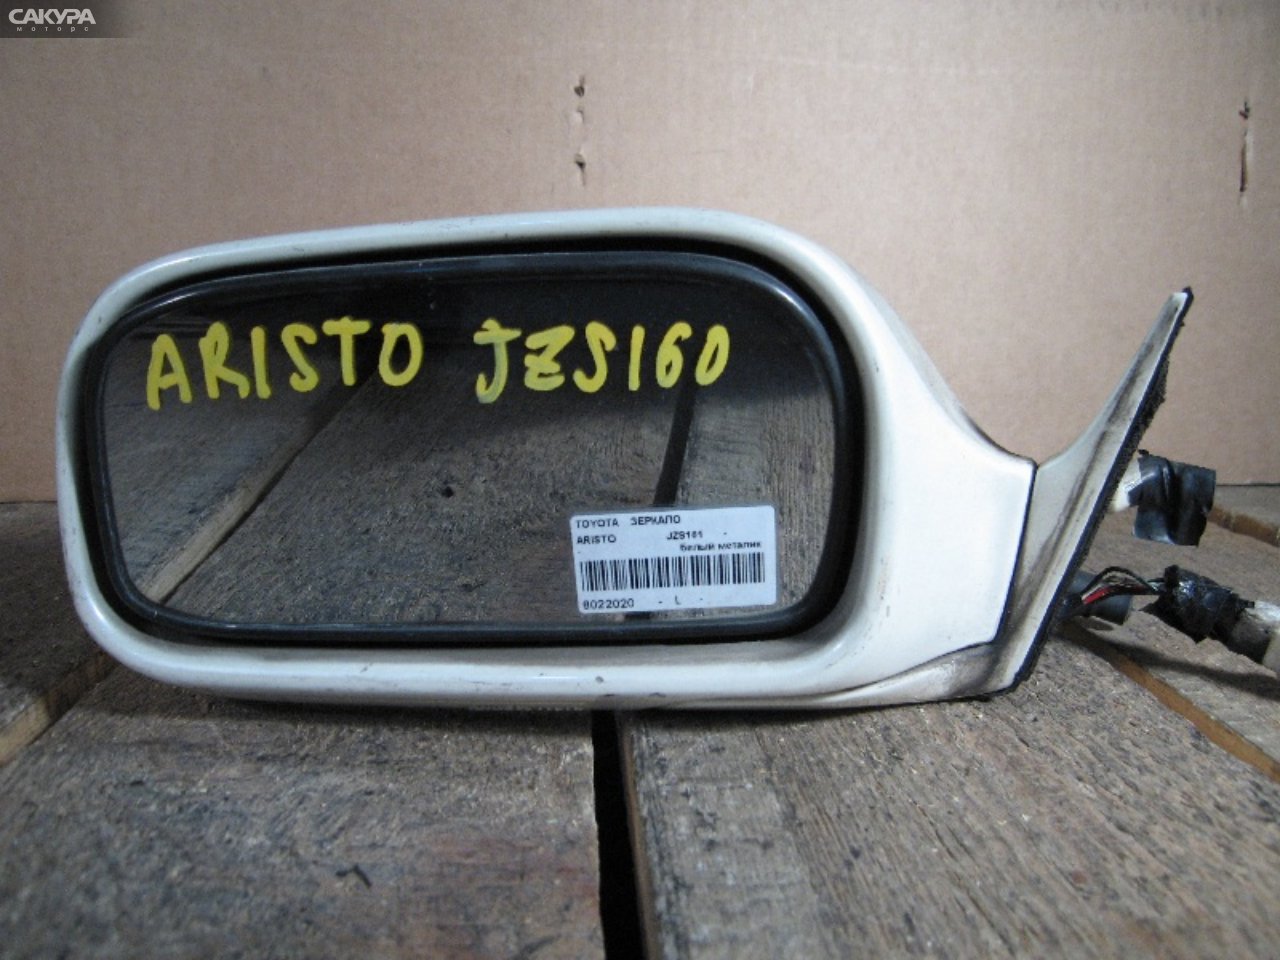 Зеркало боковое левое Toyota Aristo JZS161: купить в Сакура Абакан.